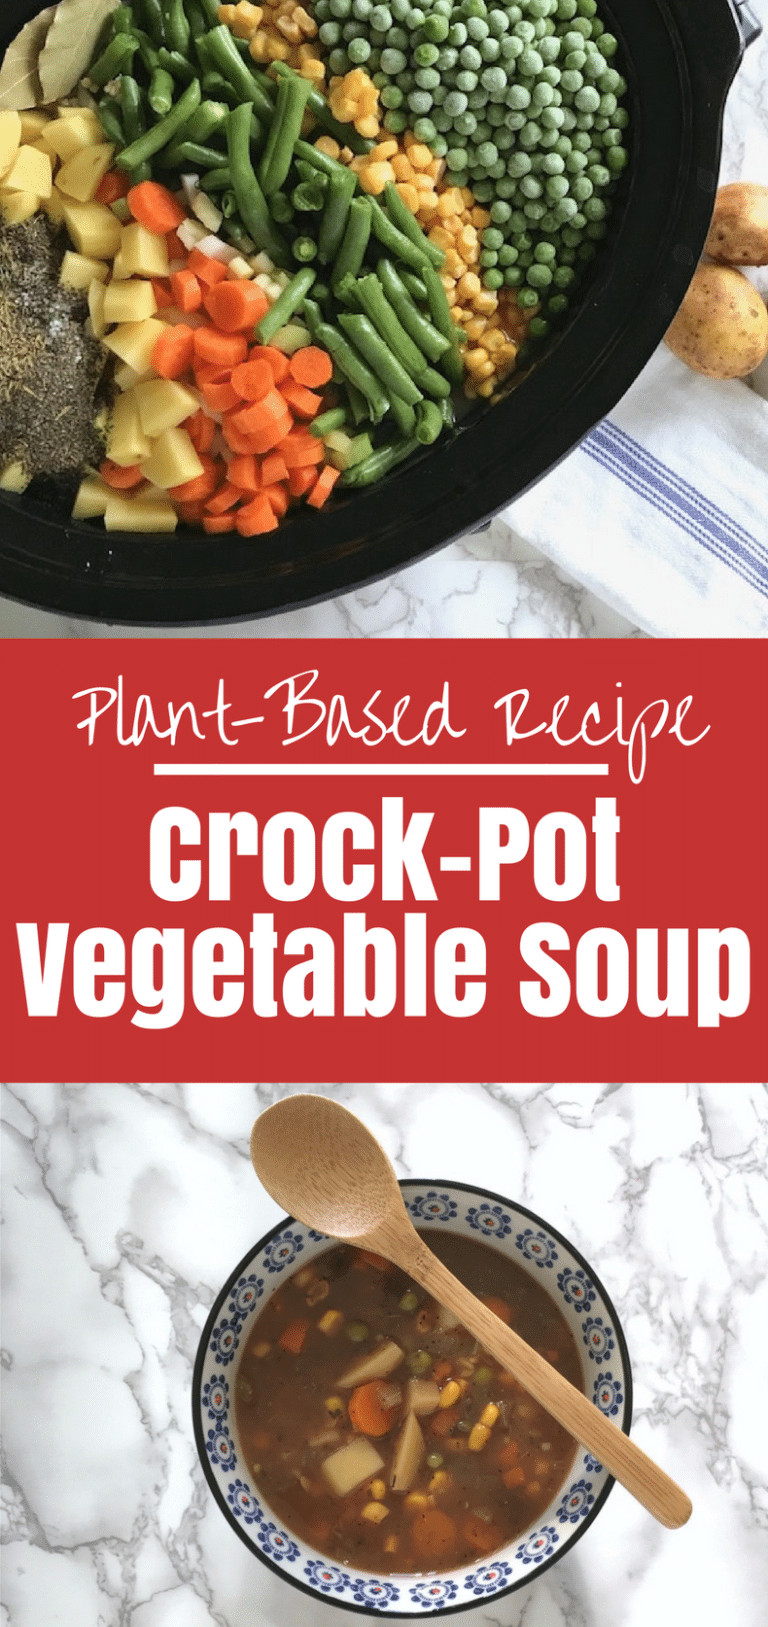 Crockpot Plant Based Recipes
 Crock Pot Ve able Soup Recipe